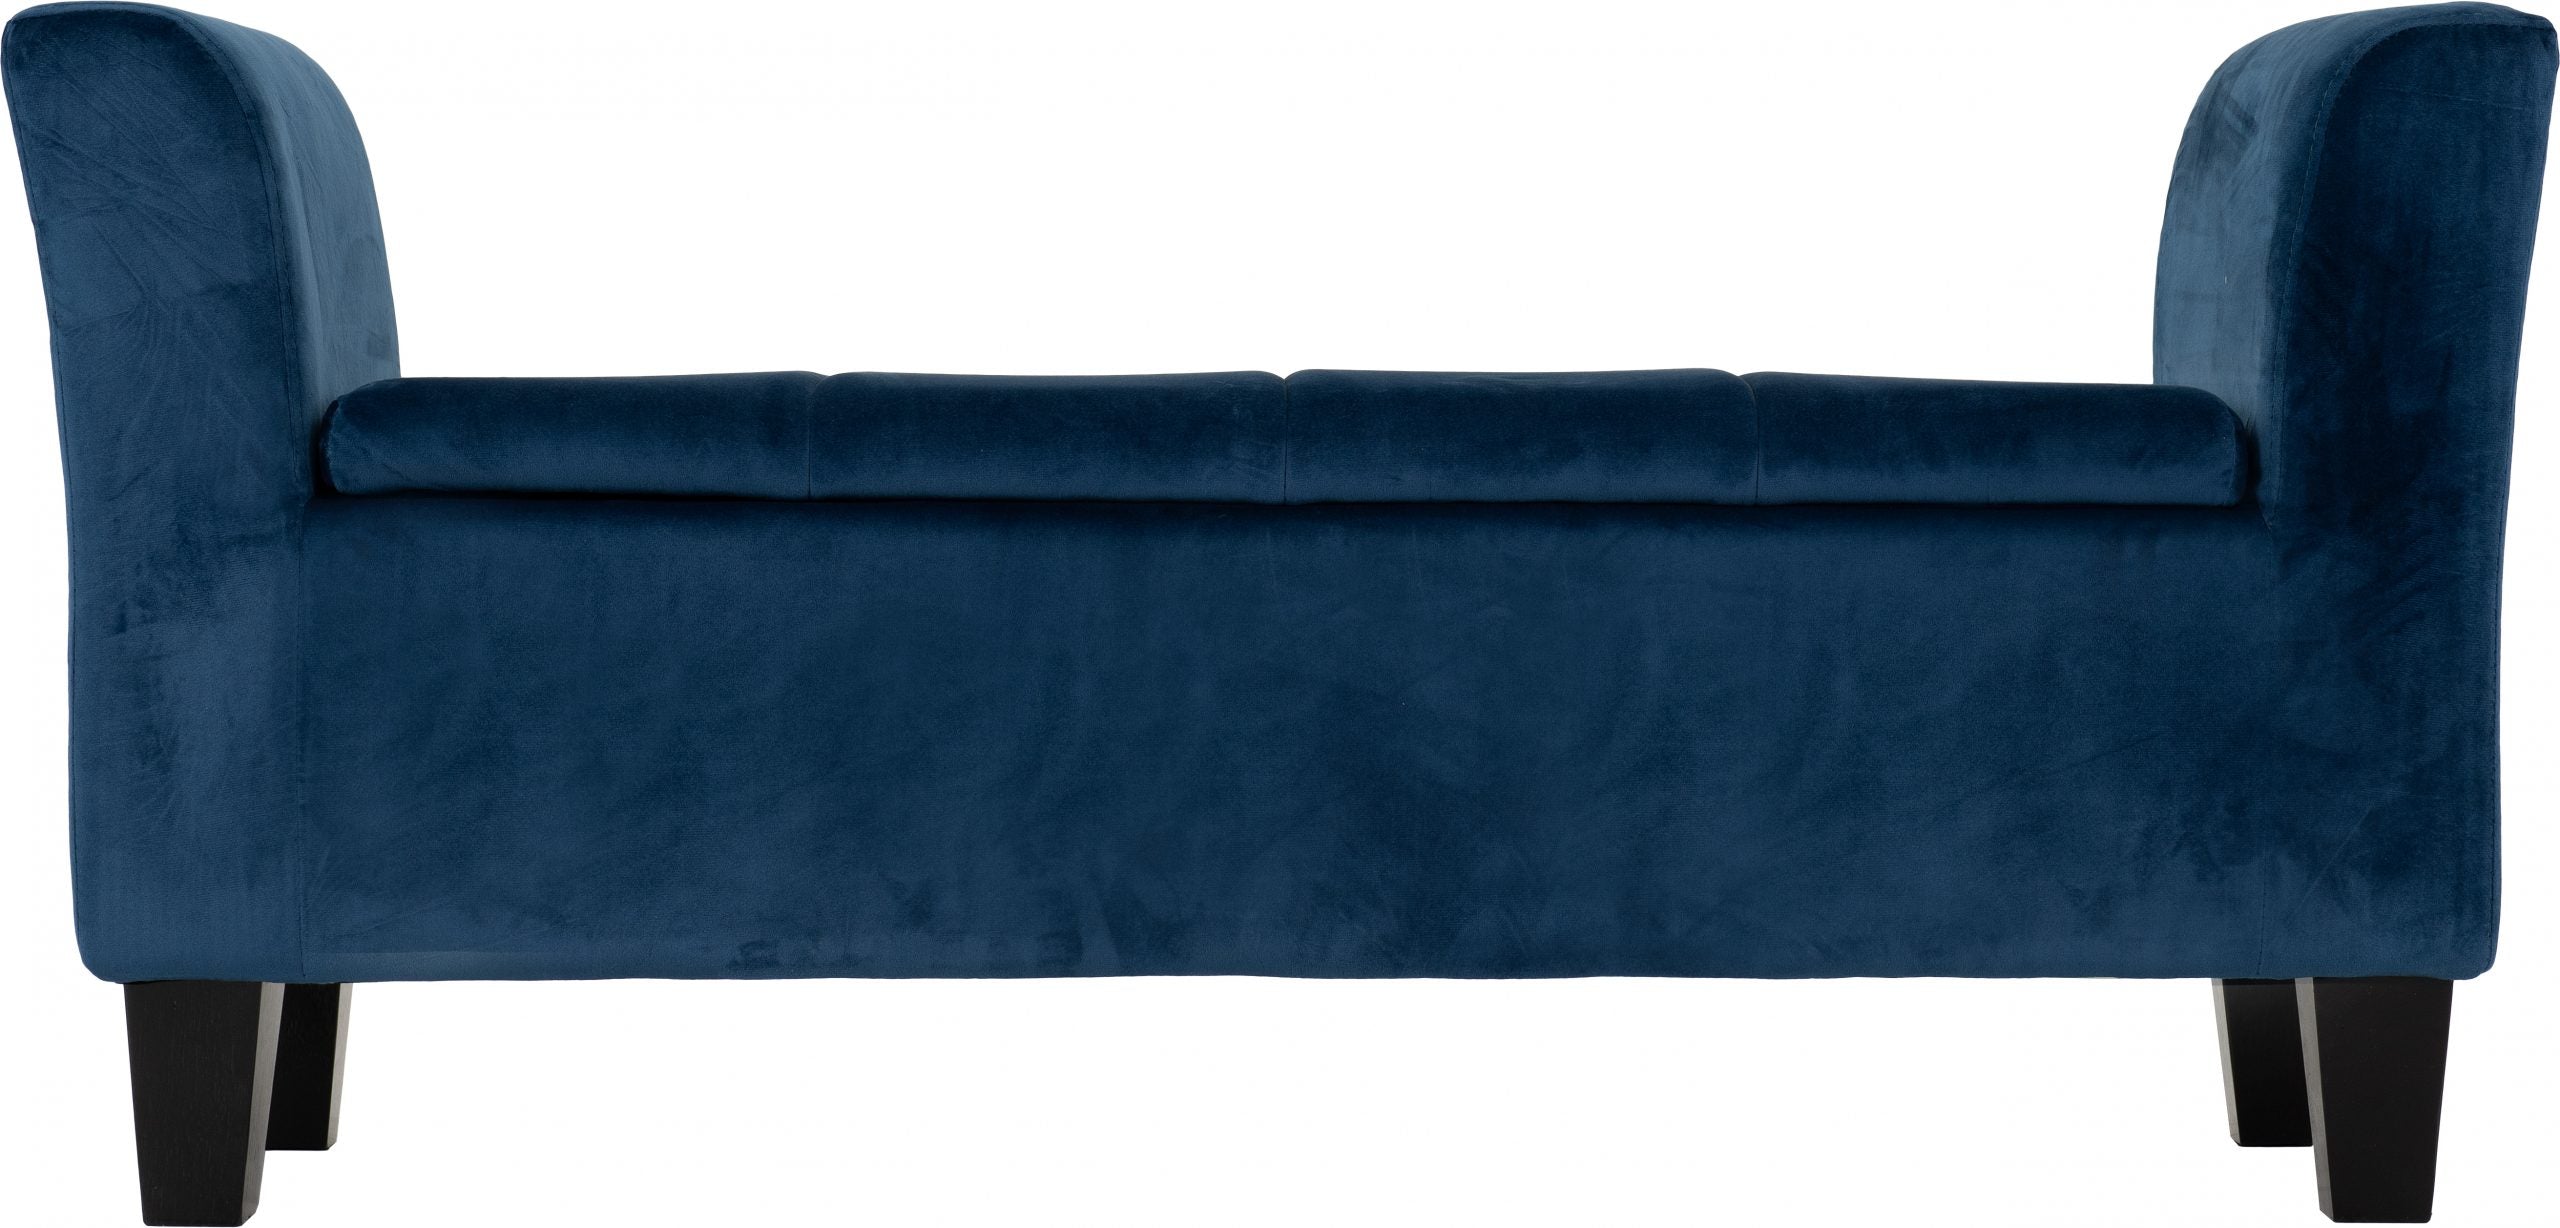 Amelia Storage Ottoman Blue Velvet Fabric